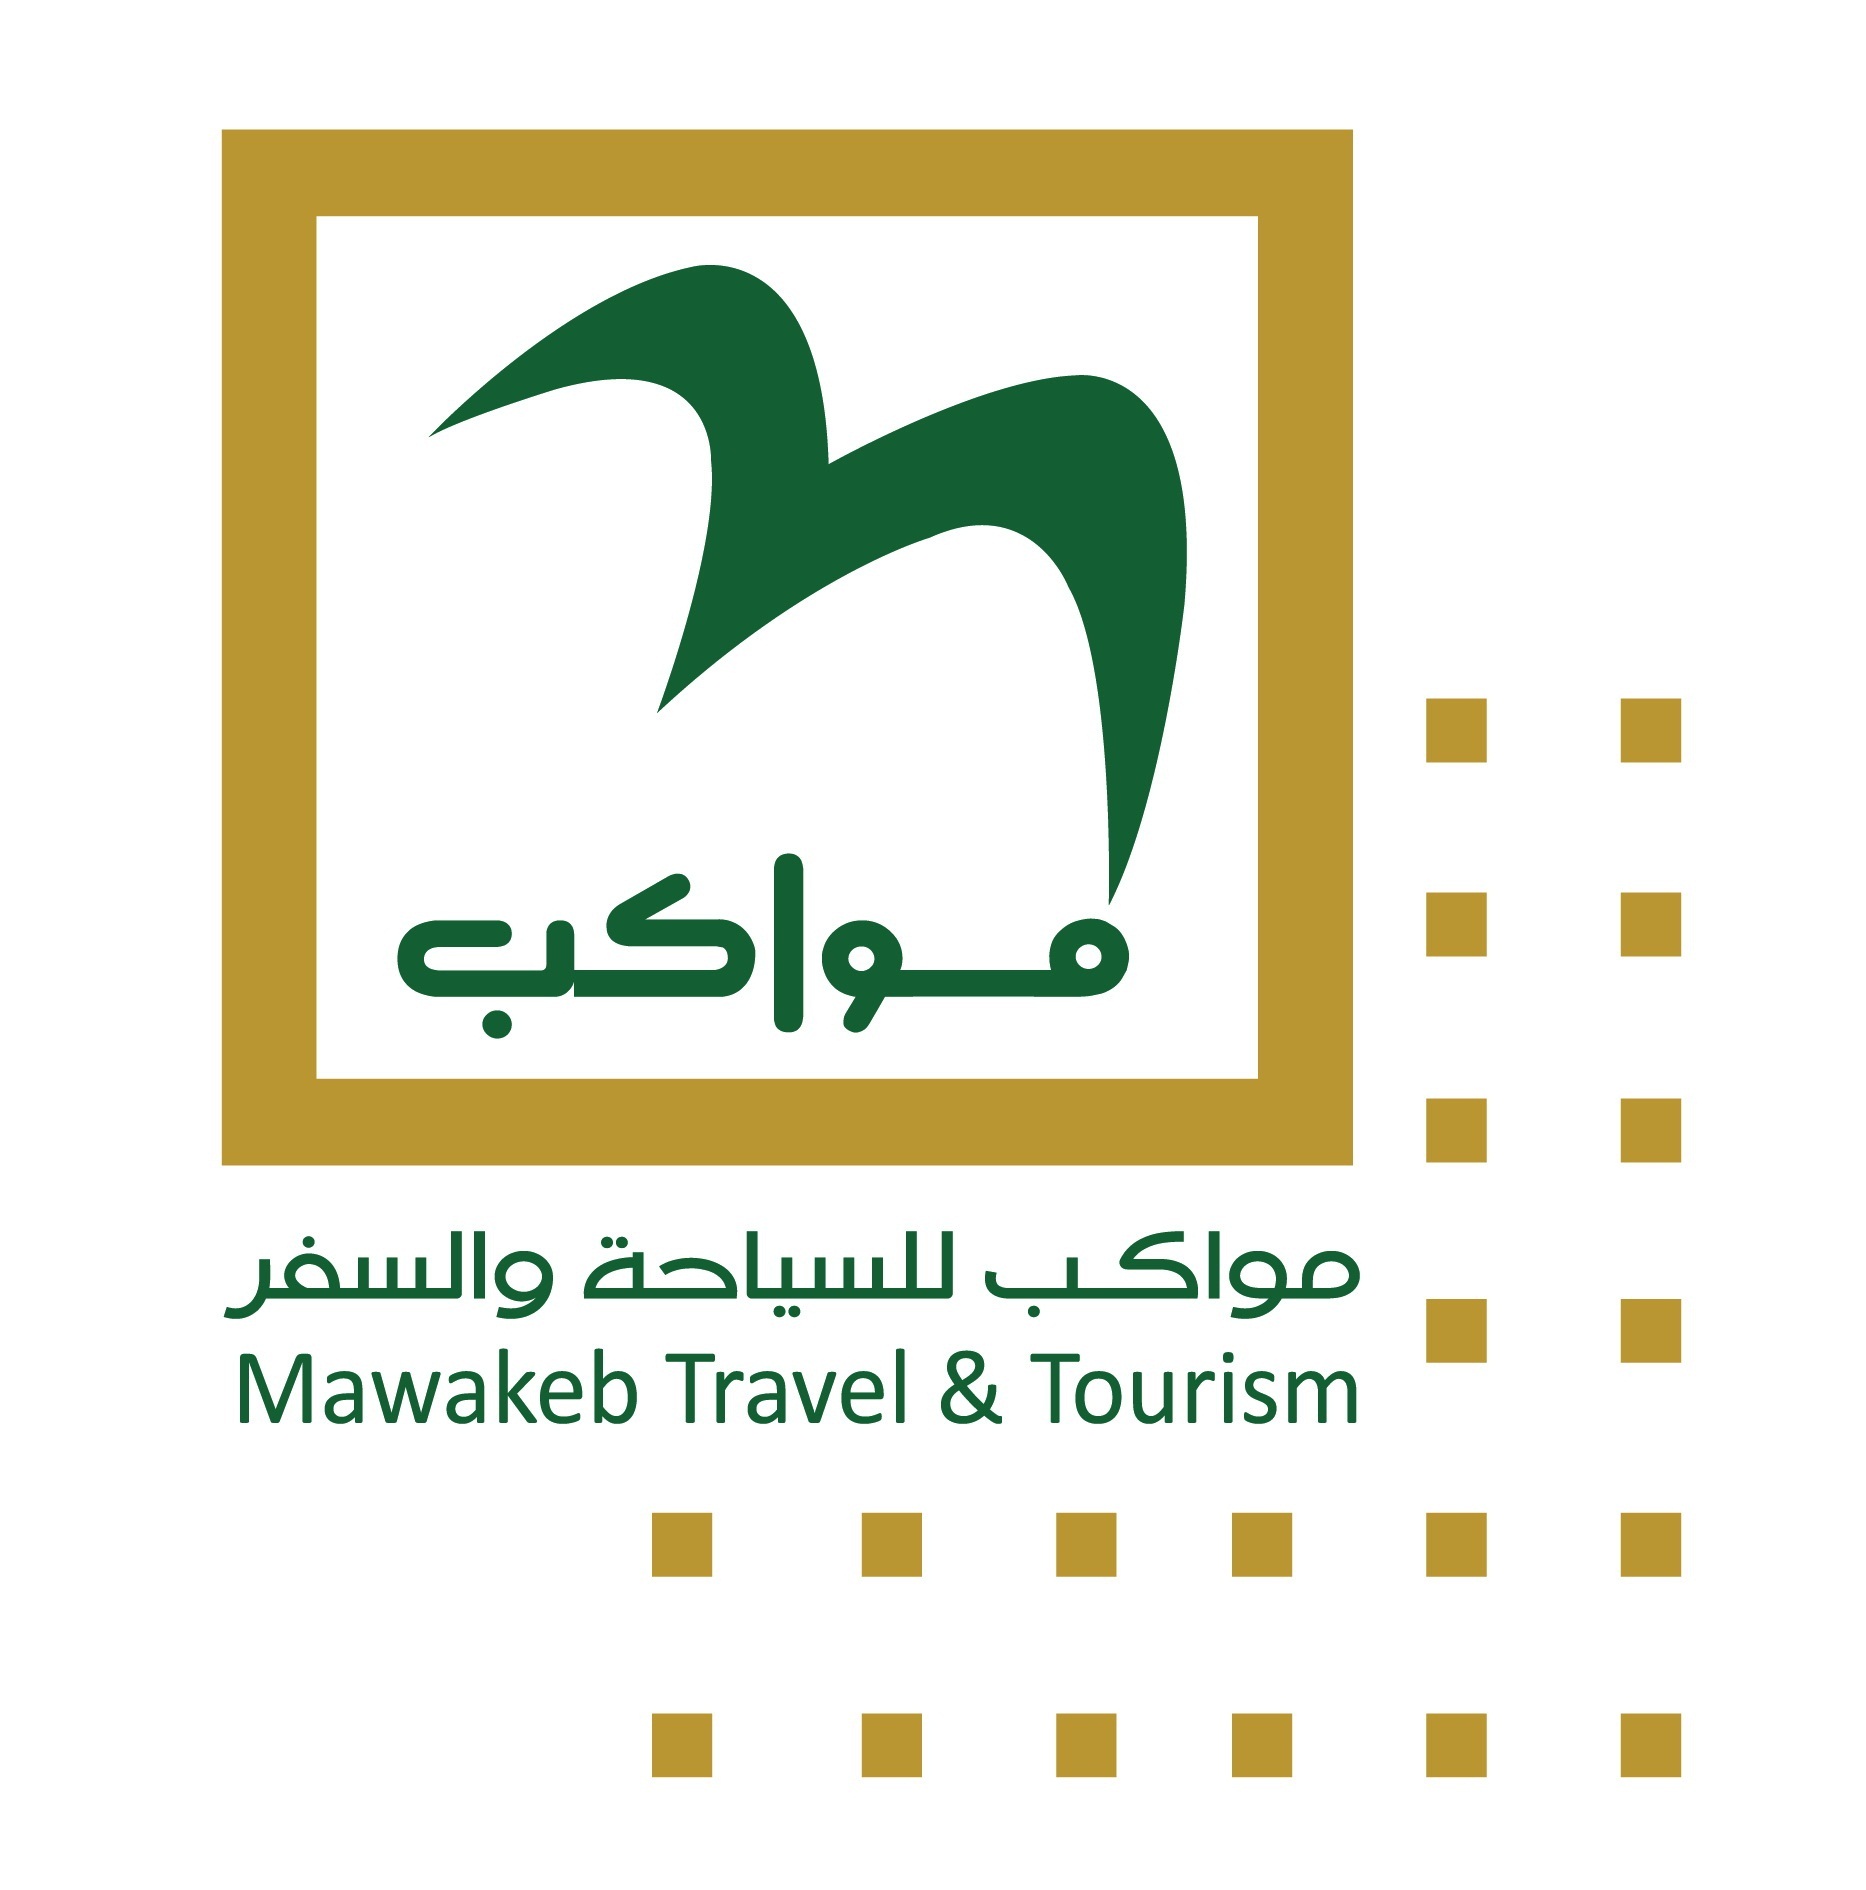 mawakeb travel & tourism amman